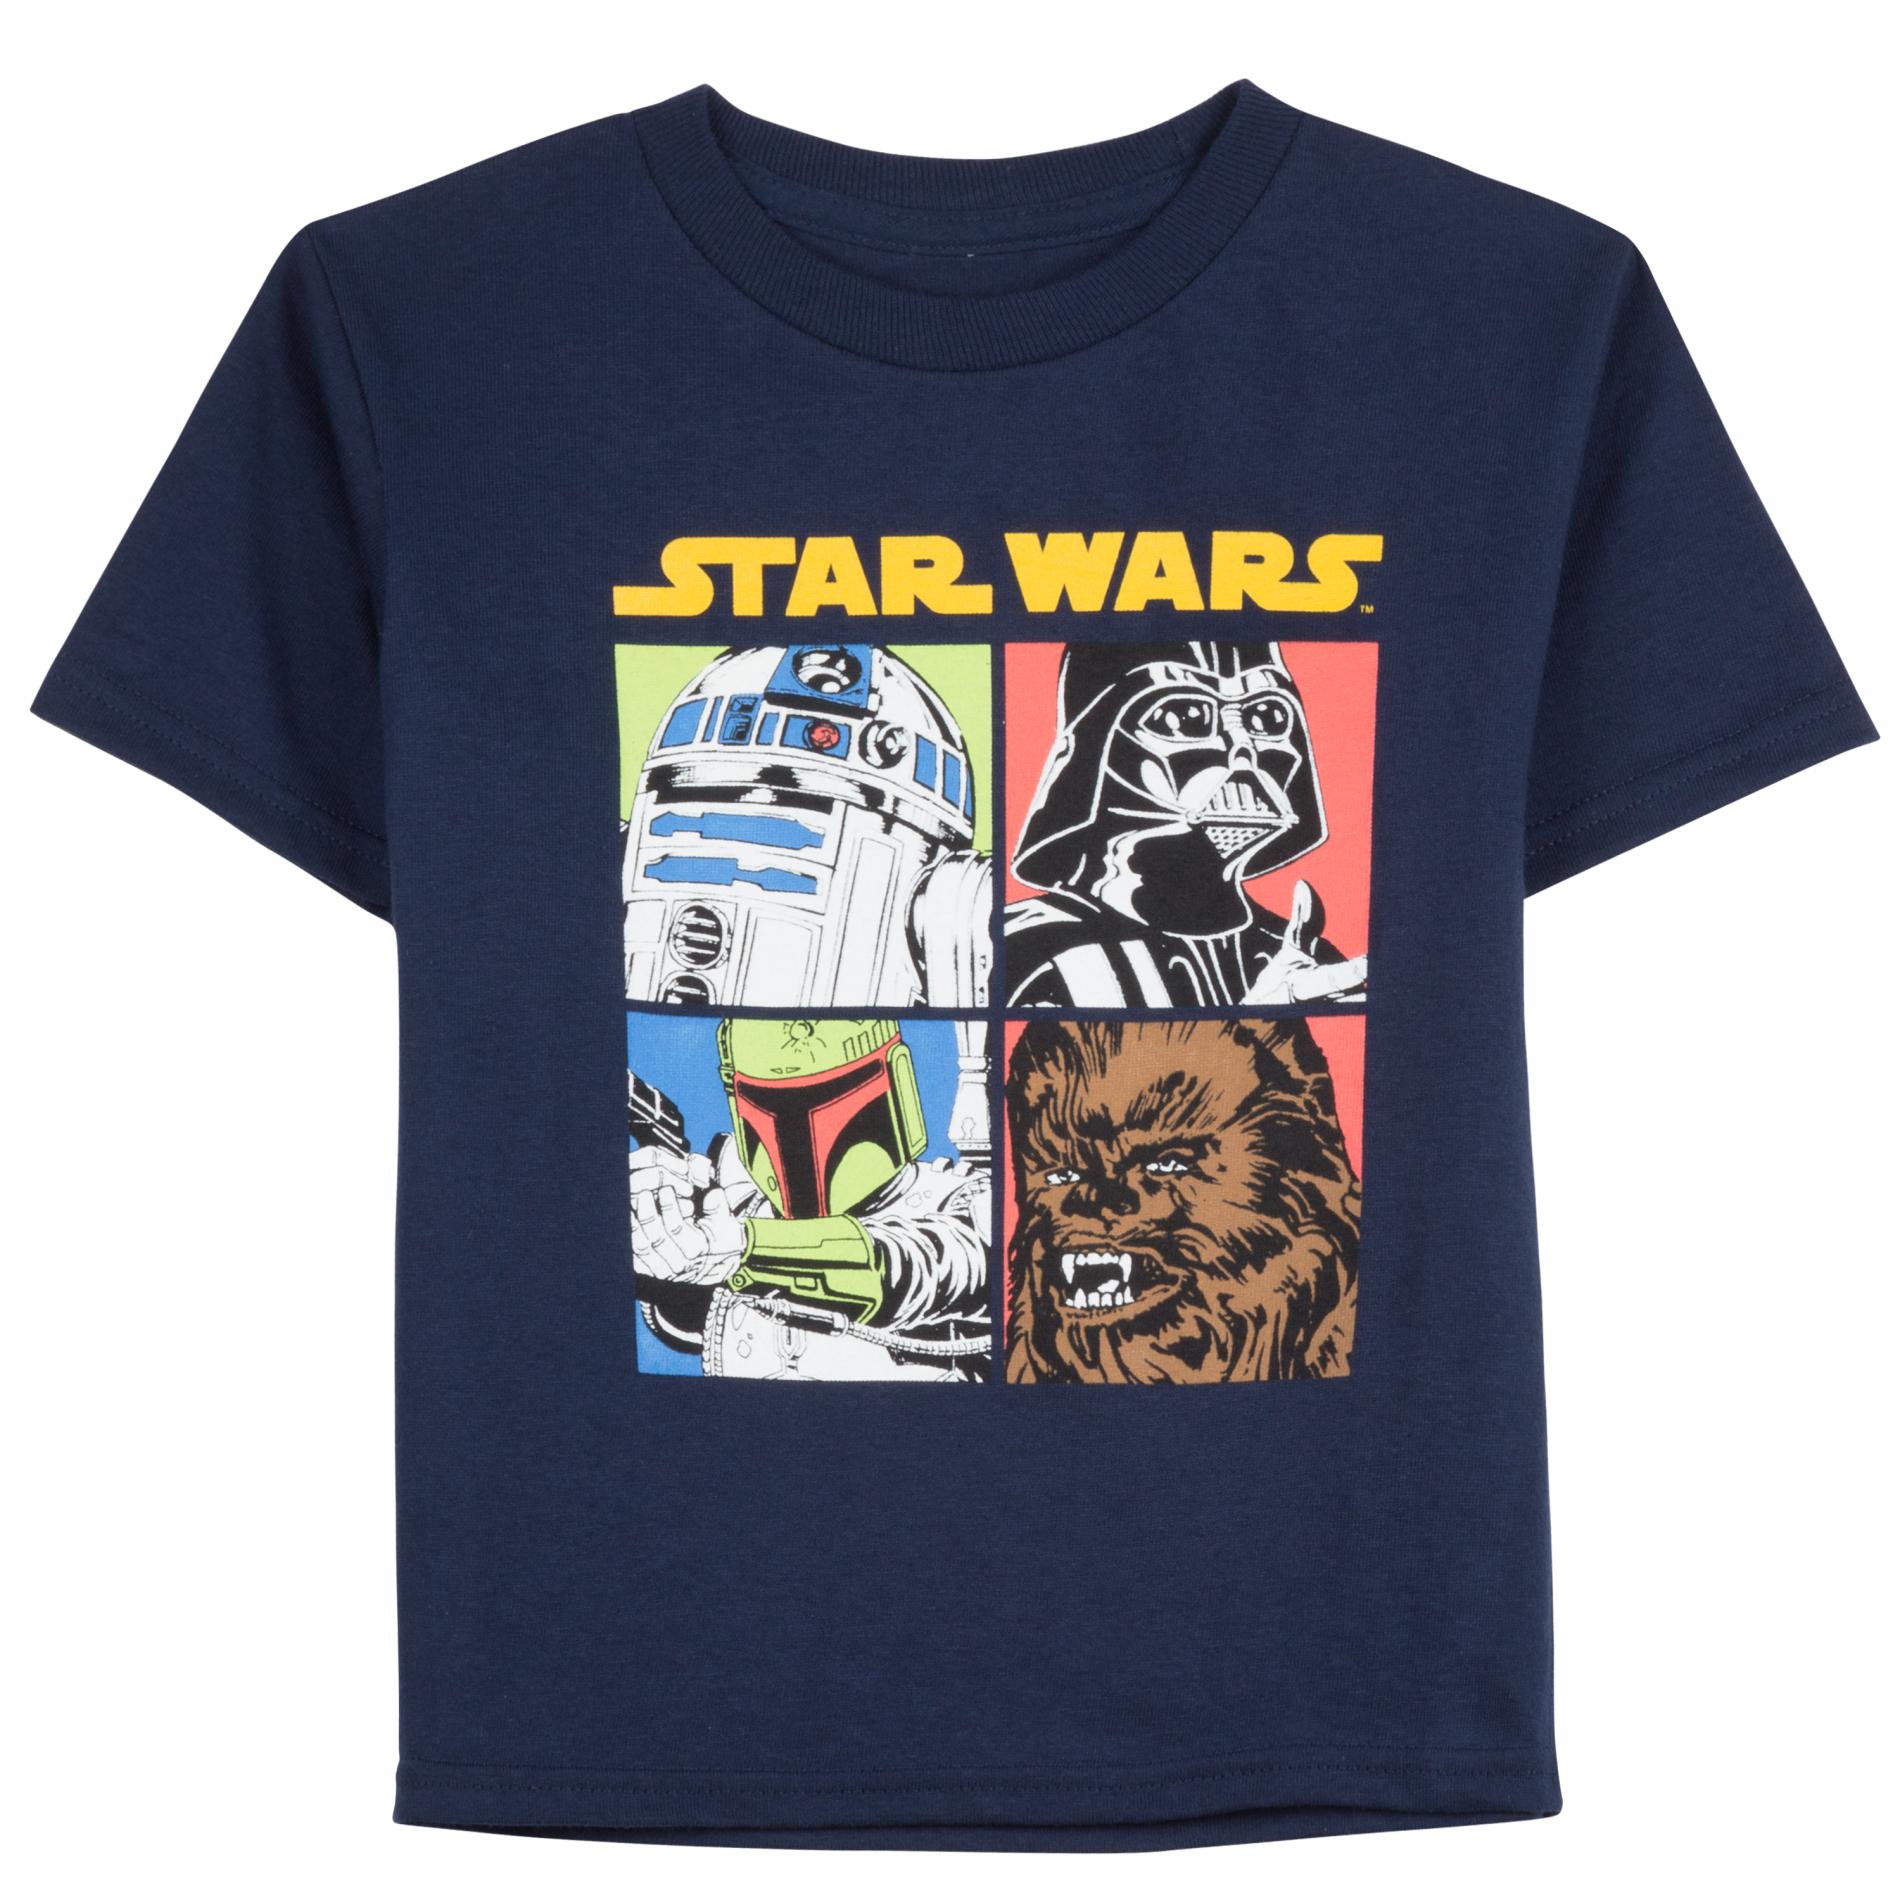 Star Wars Toddler Boy's Graphic T-Shirt